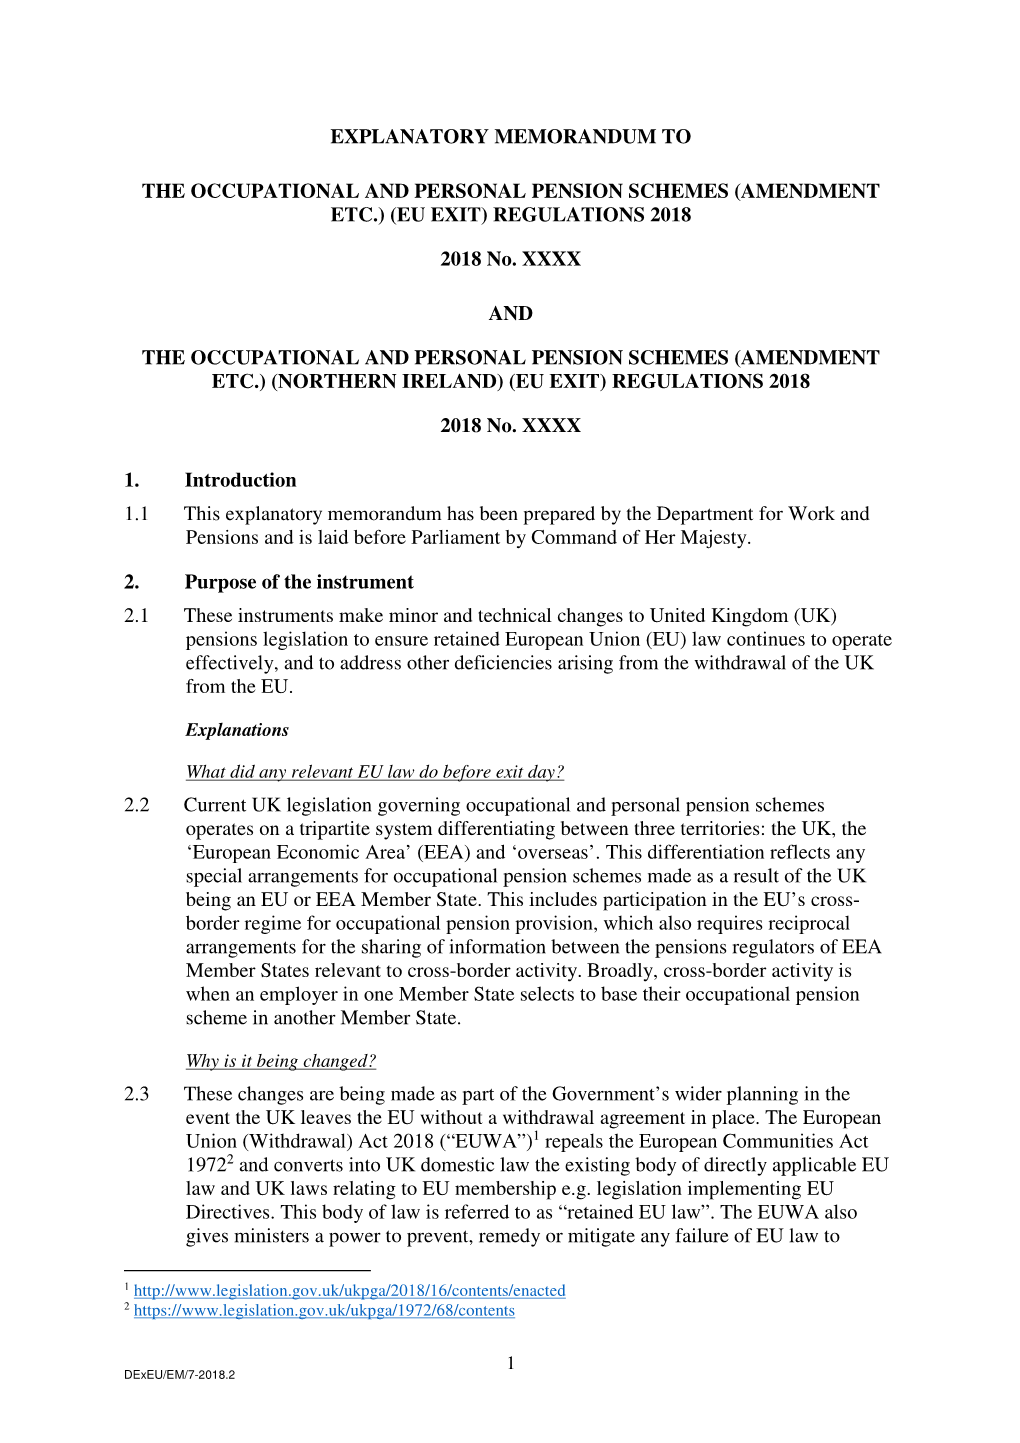 The Occupational and Personal Pension Schemes (Amendment Etc.) (Eu Exit) Regulations 2018